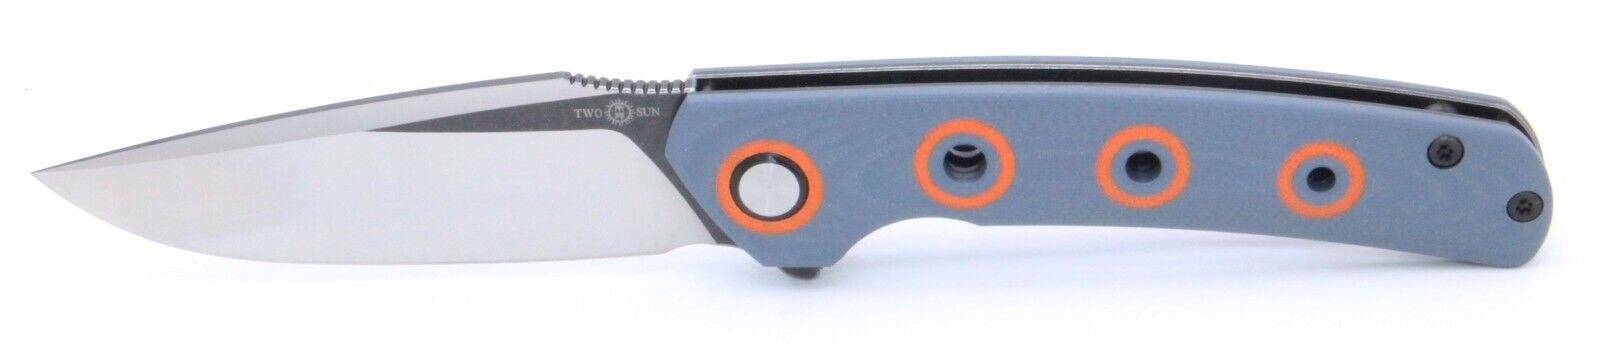 Two Sun Folding Knife Gray With Orange G10 Handle 14C28N Plain Edge TS277